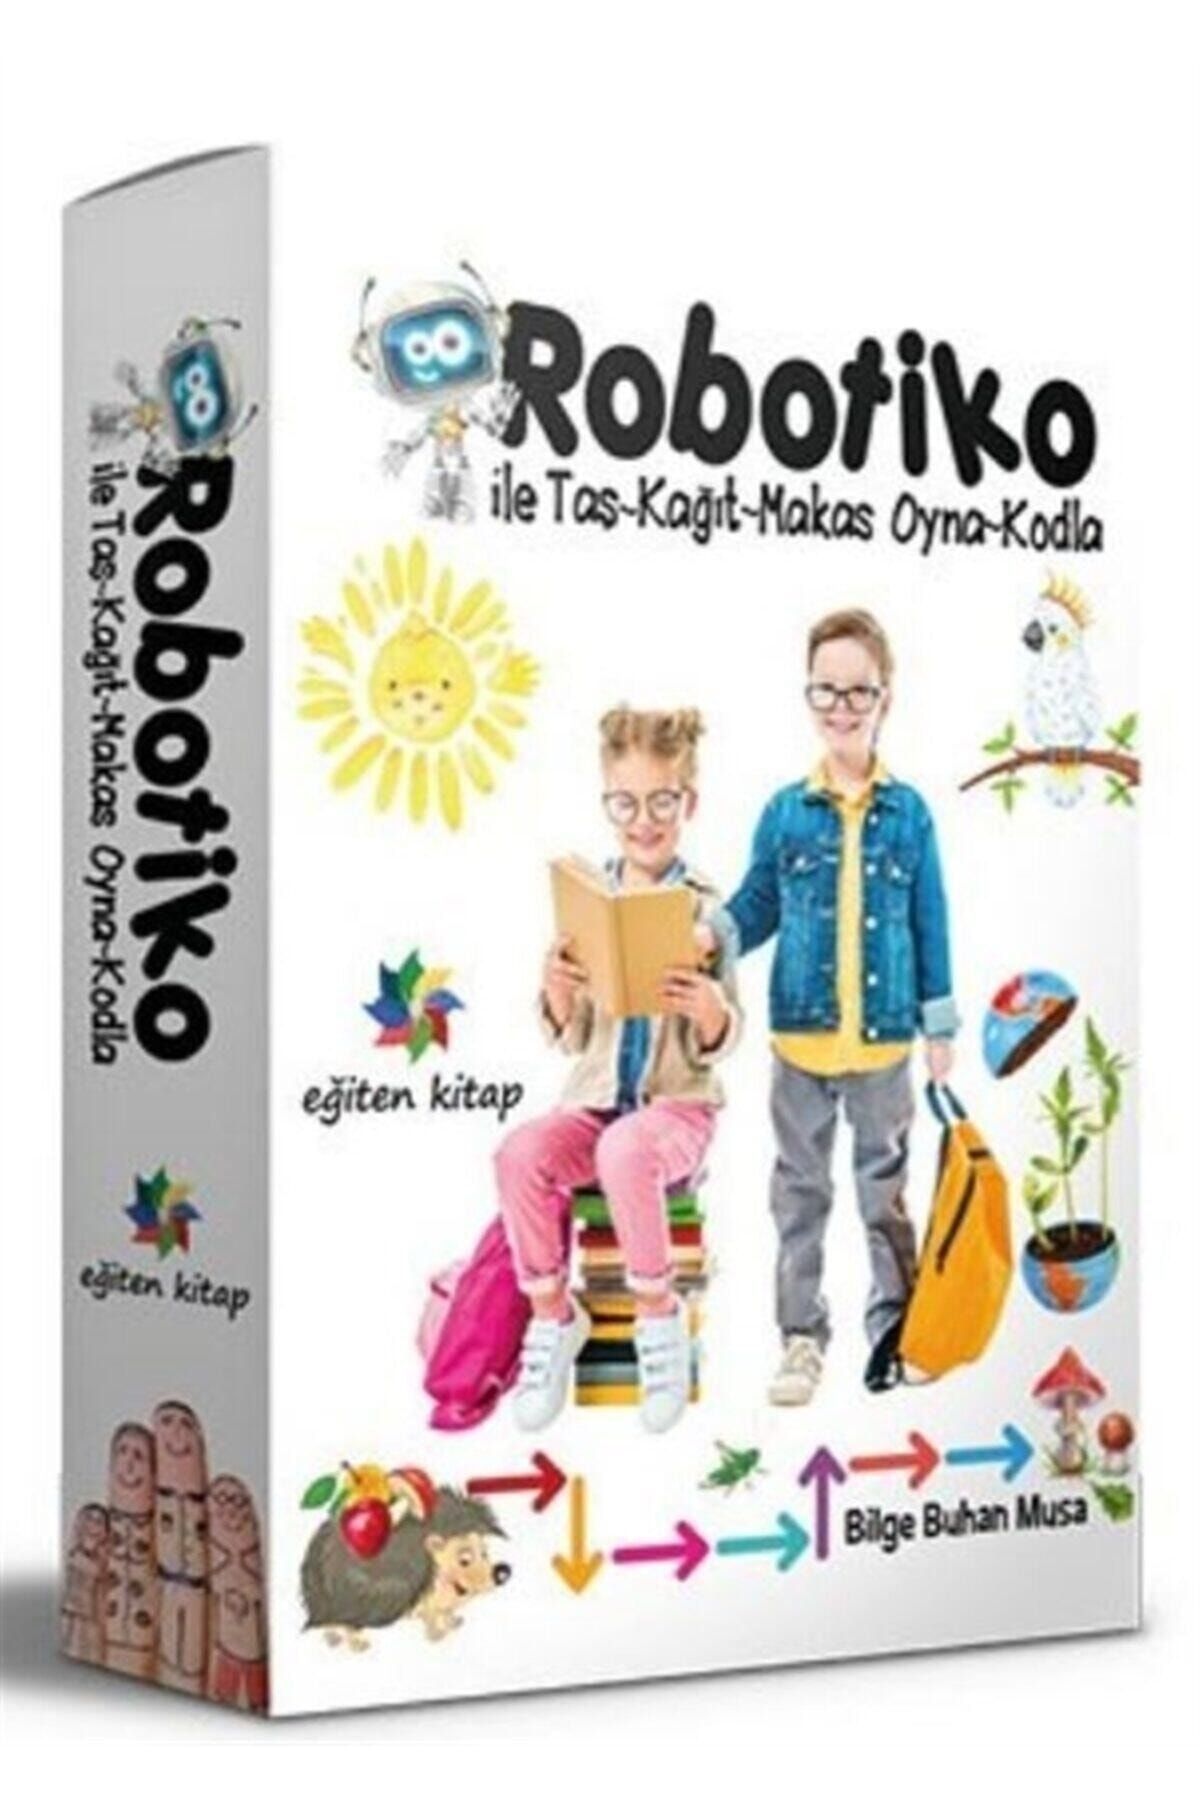 Eğiten Kitap Robotiko ile Taş-Kağıt-Makas Oyna-Kodla / Bilge Buhan Musa / Eğiten Kitap / 9786057647191